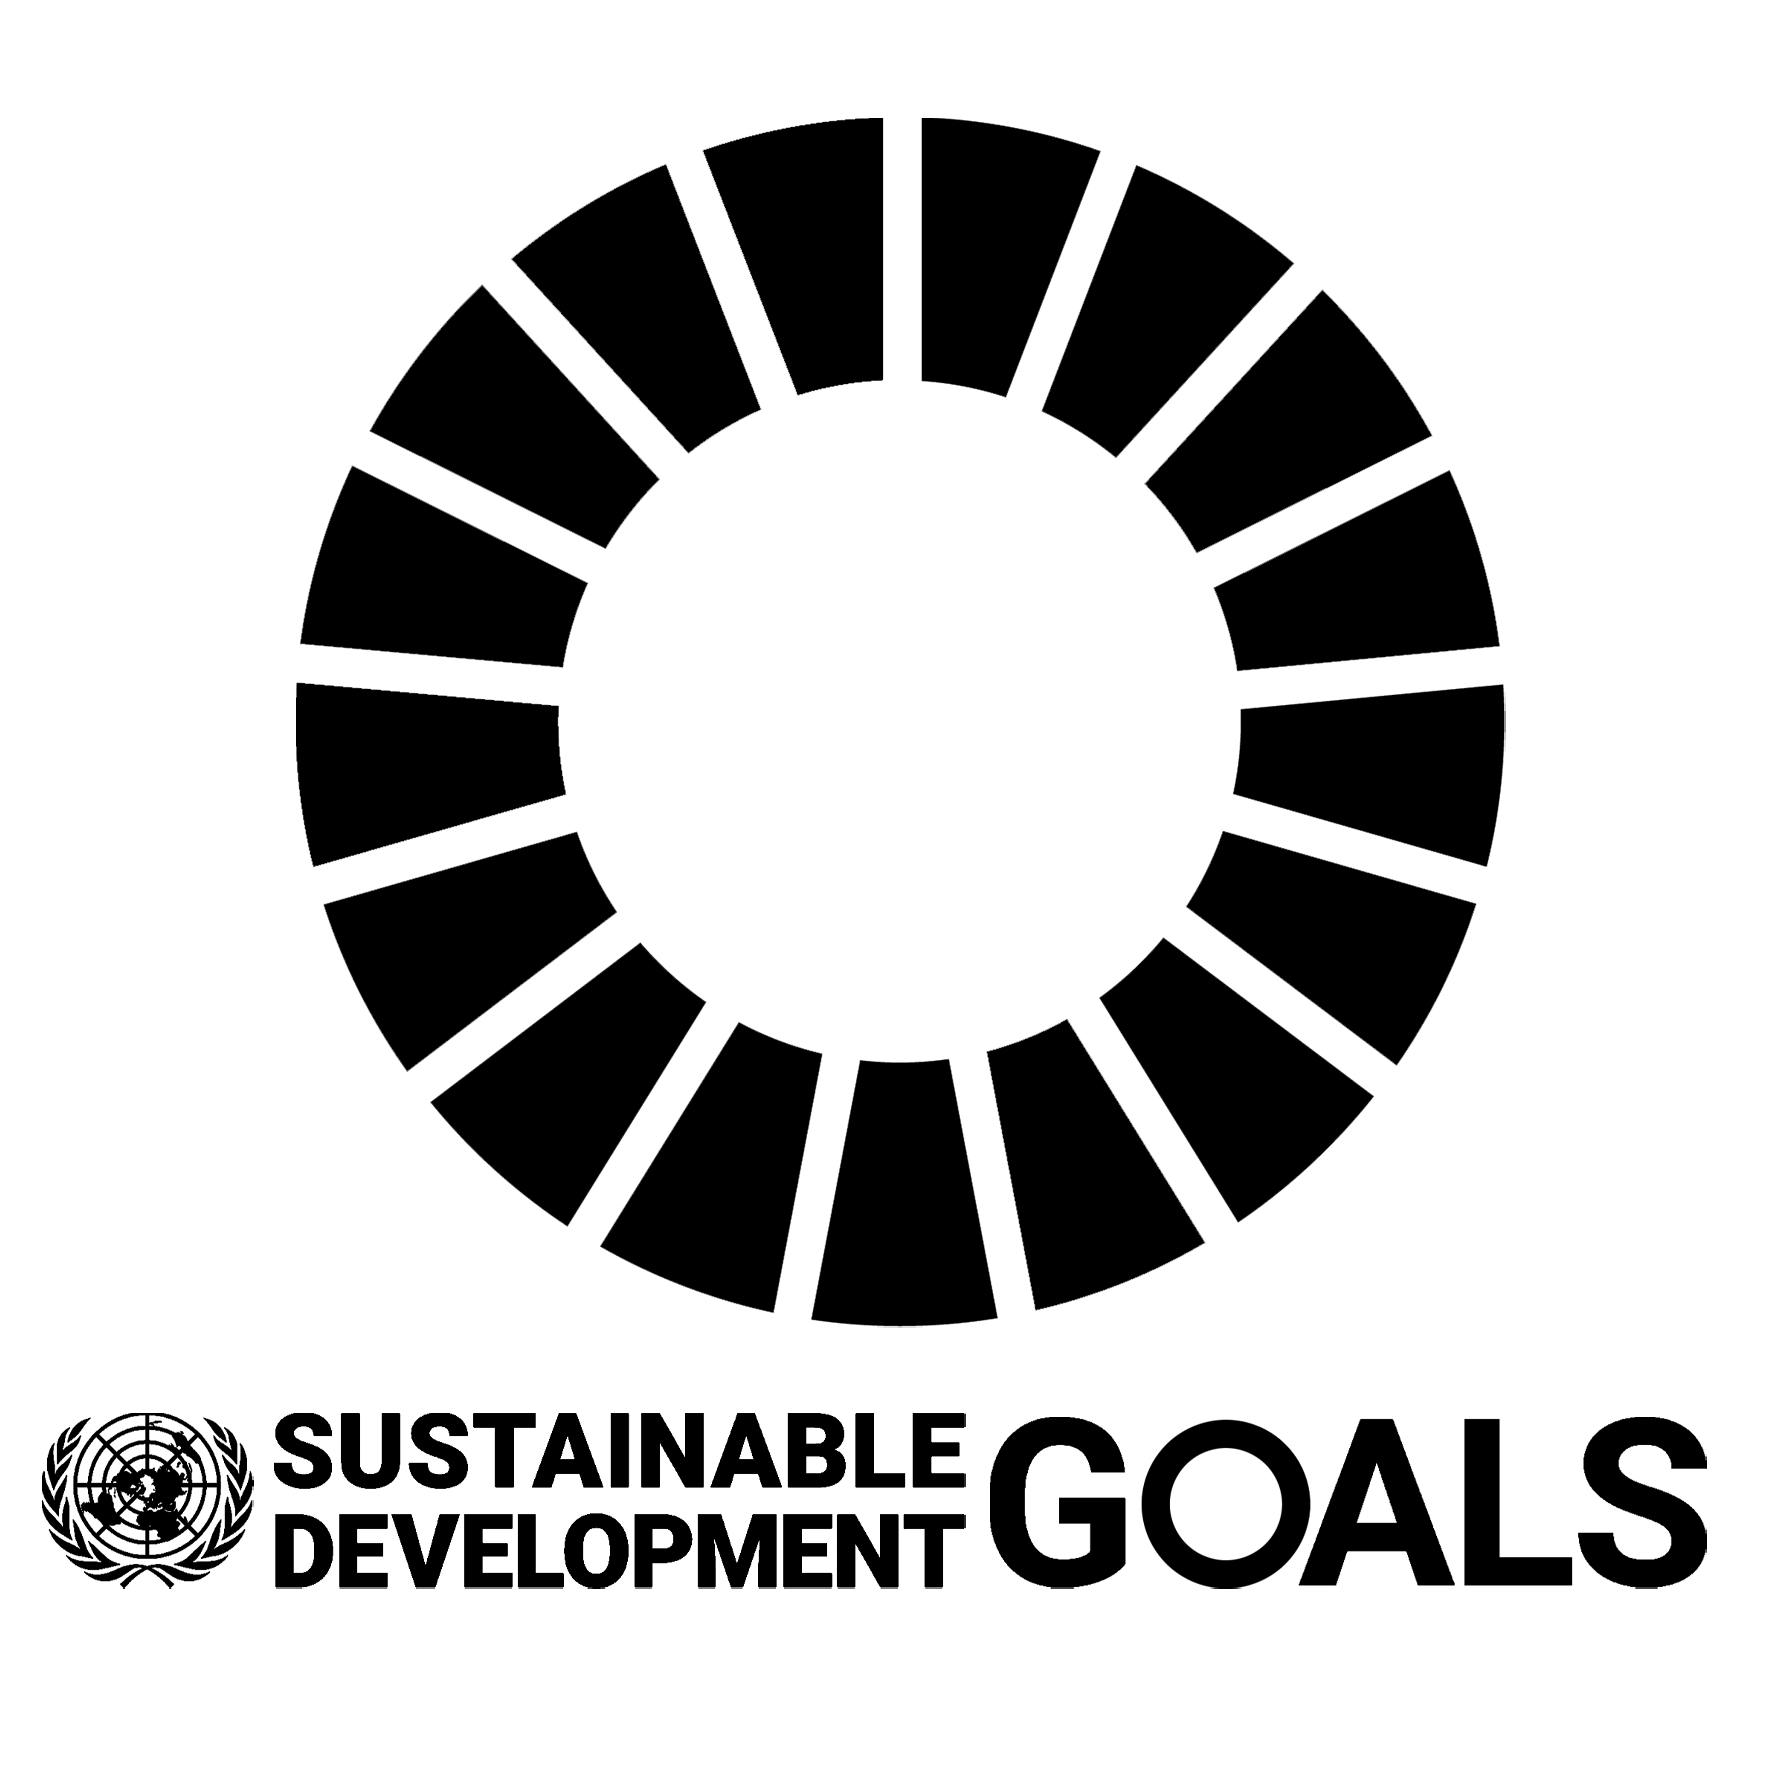 YK:n Agenda 2030 -logo, jossa lukee "sustainable development goals"